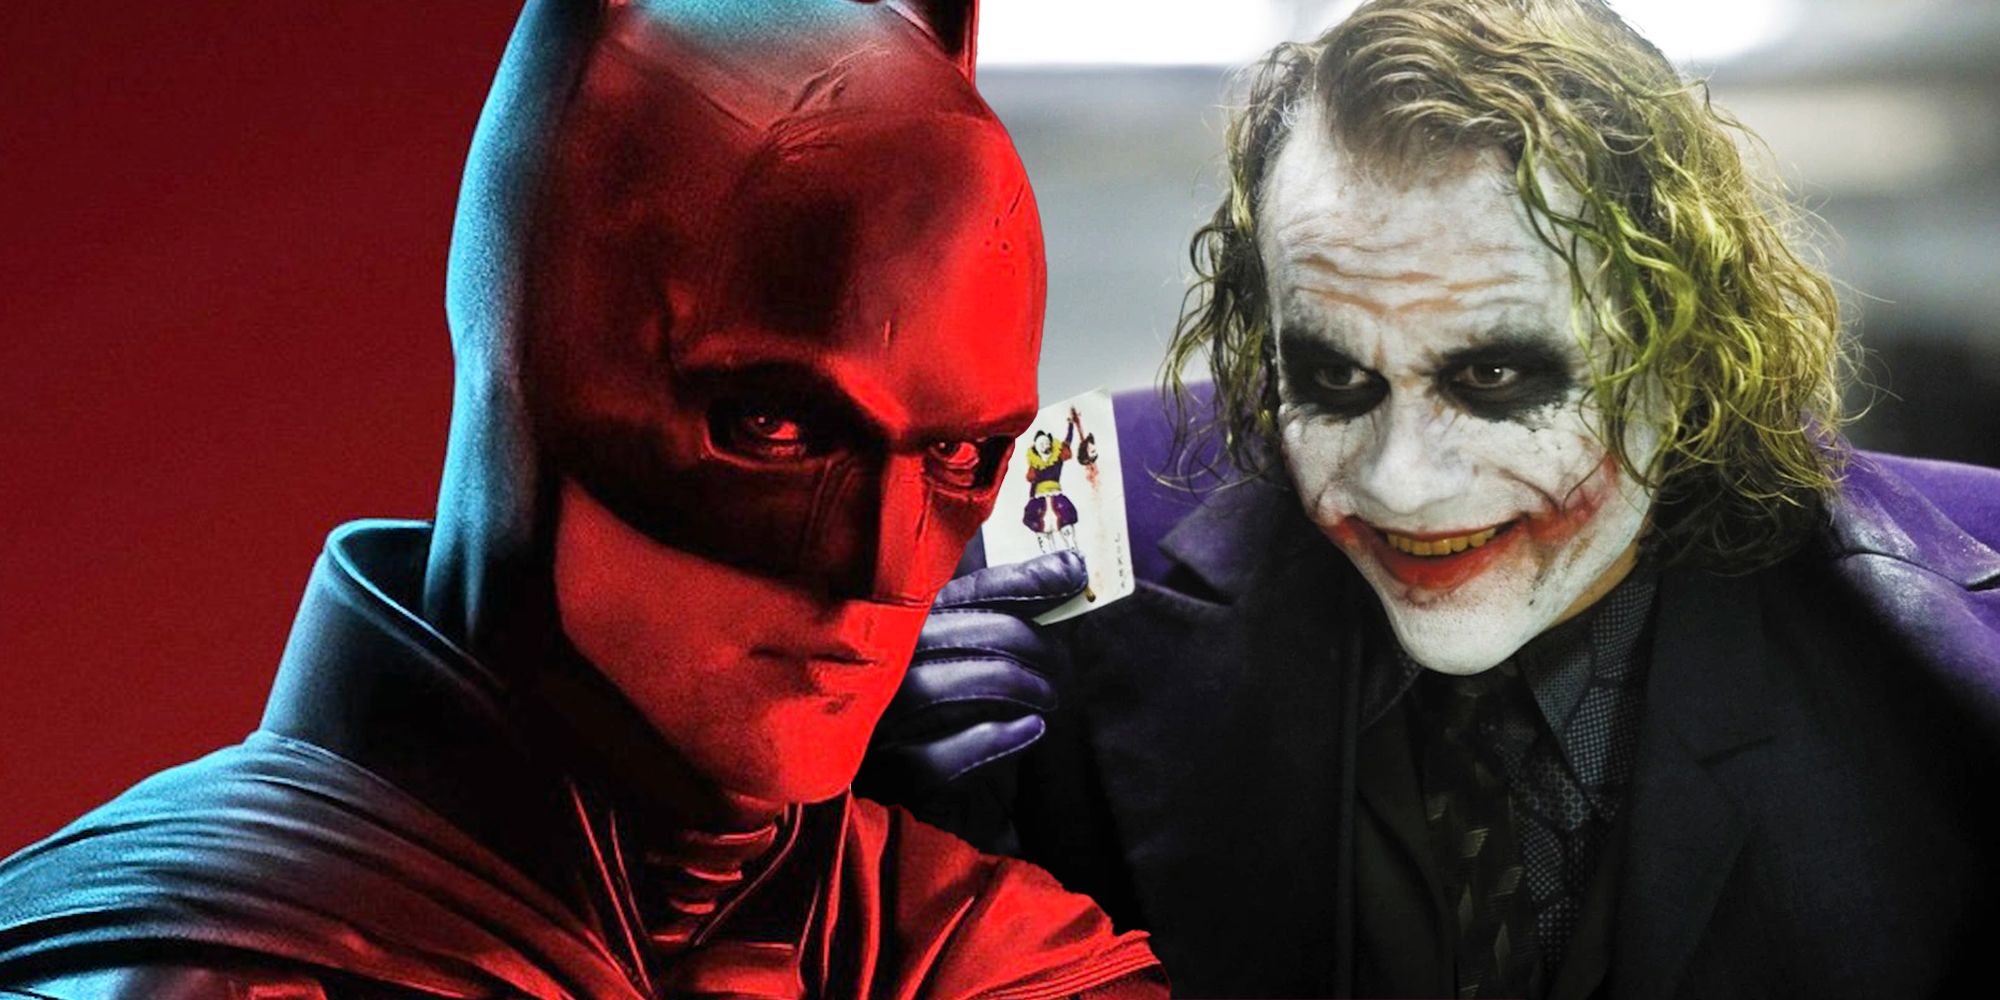 Robert Pattinson's Batman and Heath Ledger's Joker